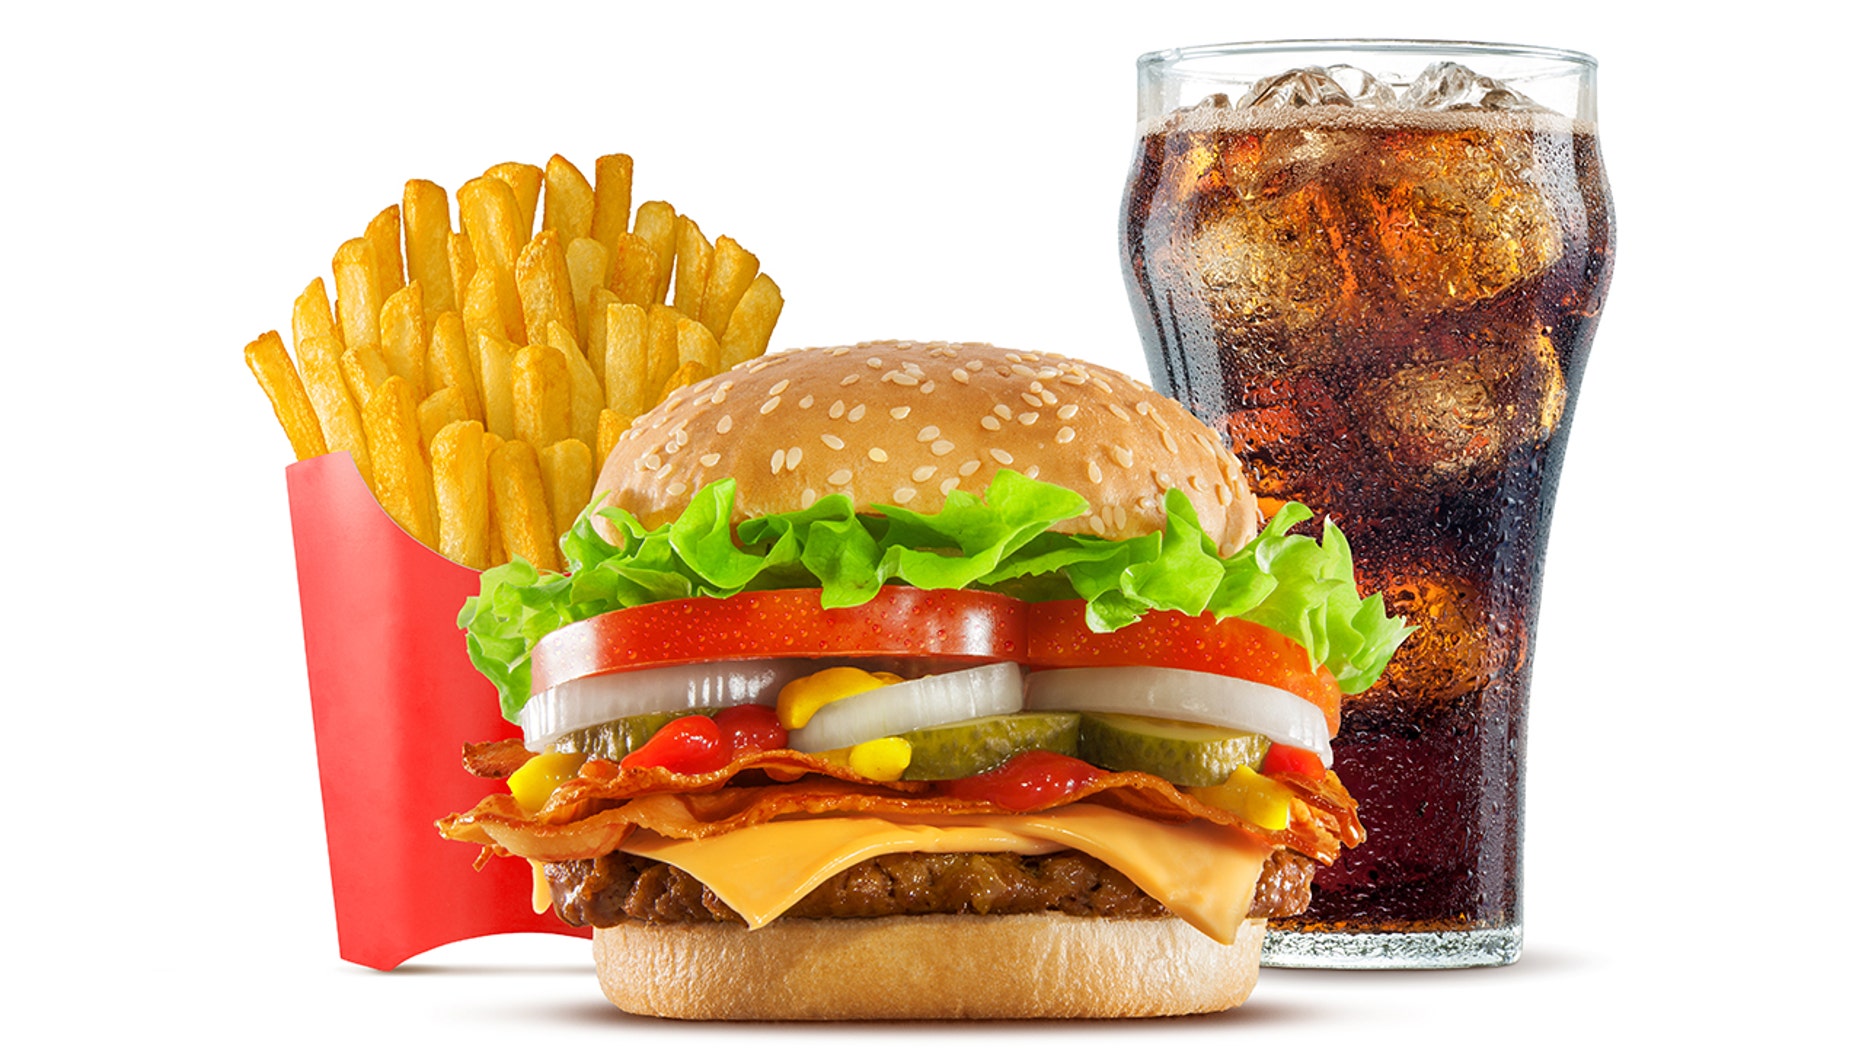 Fast Food Restaurants May Be Healthier Than Five Star Restaurants